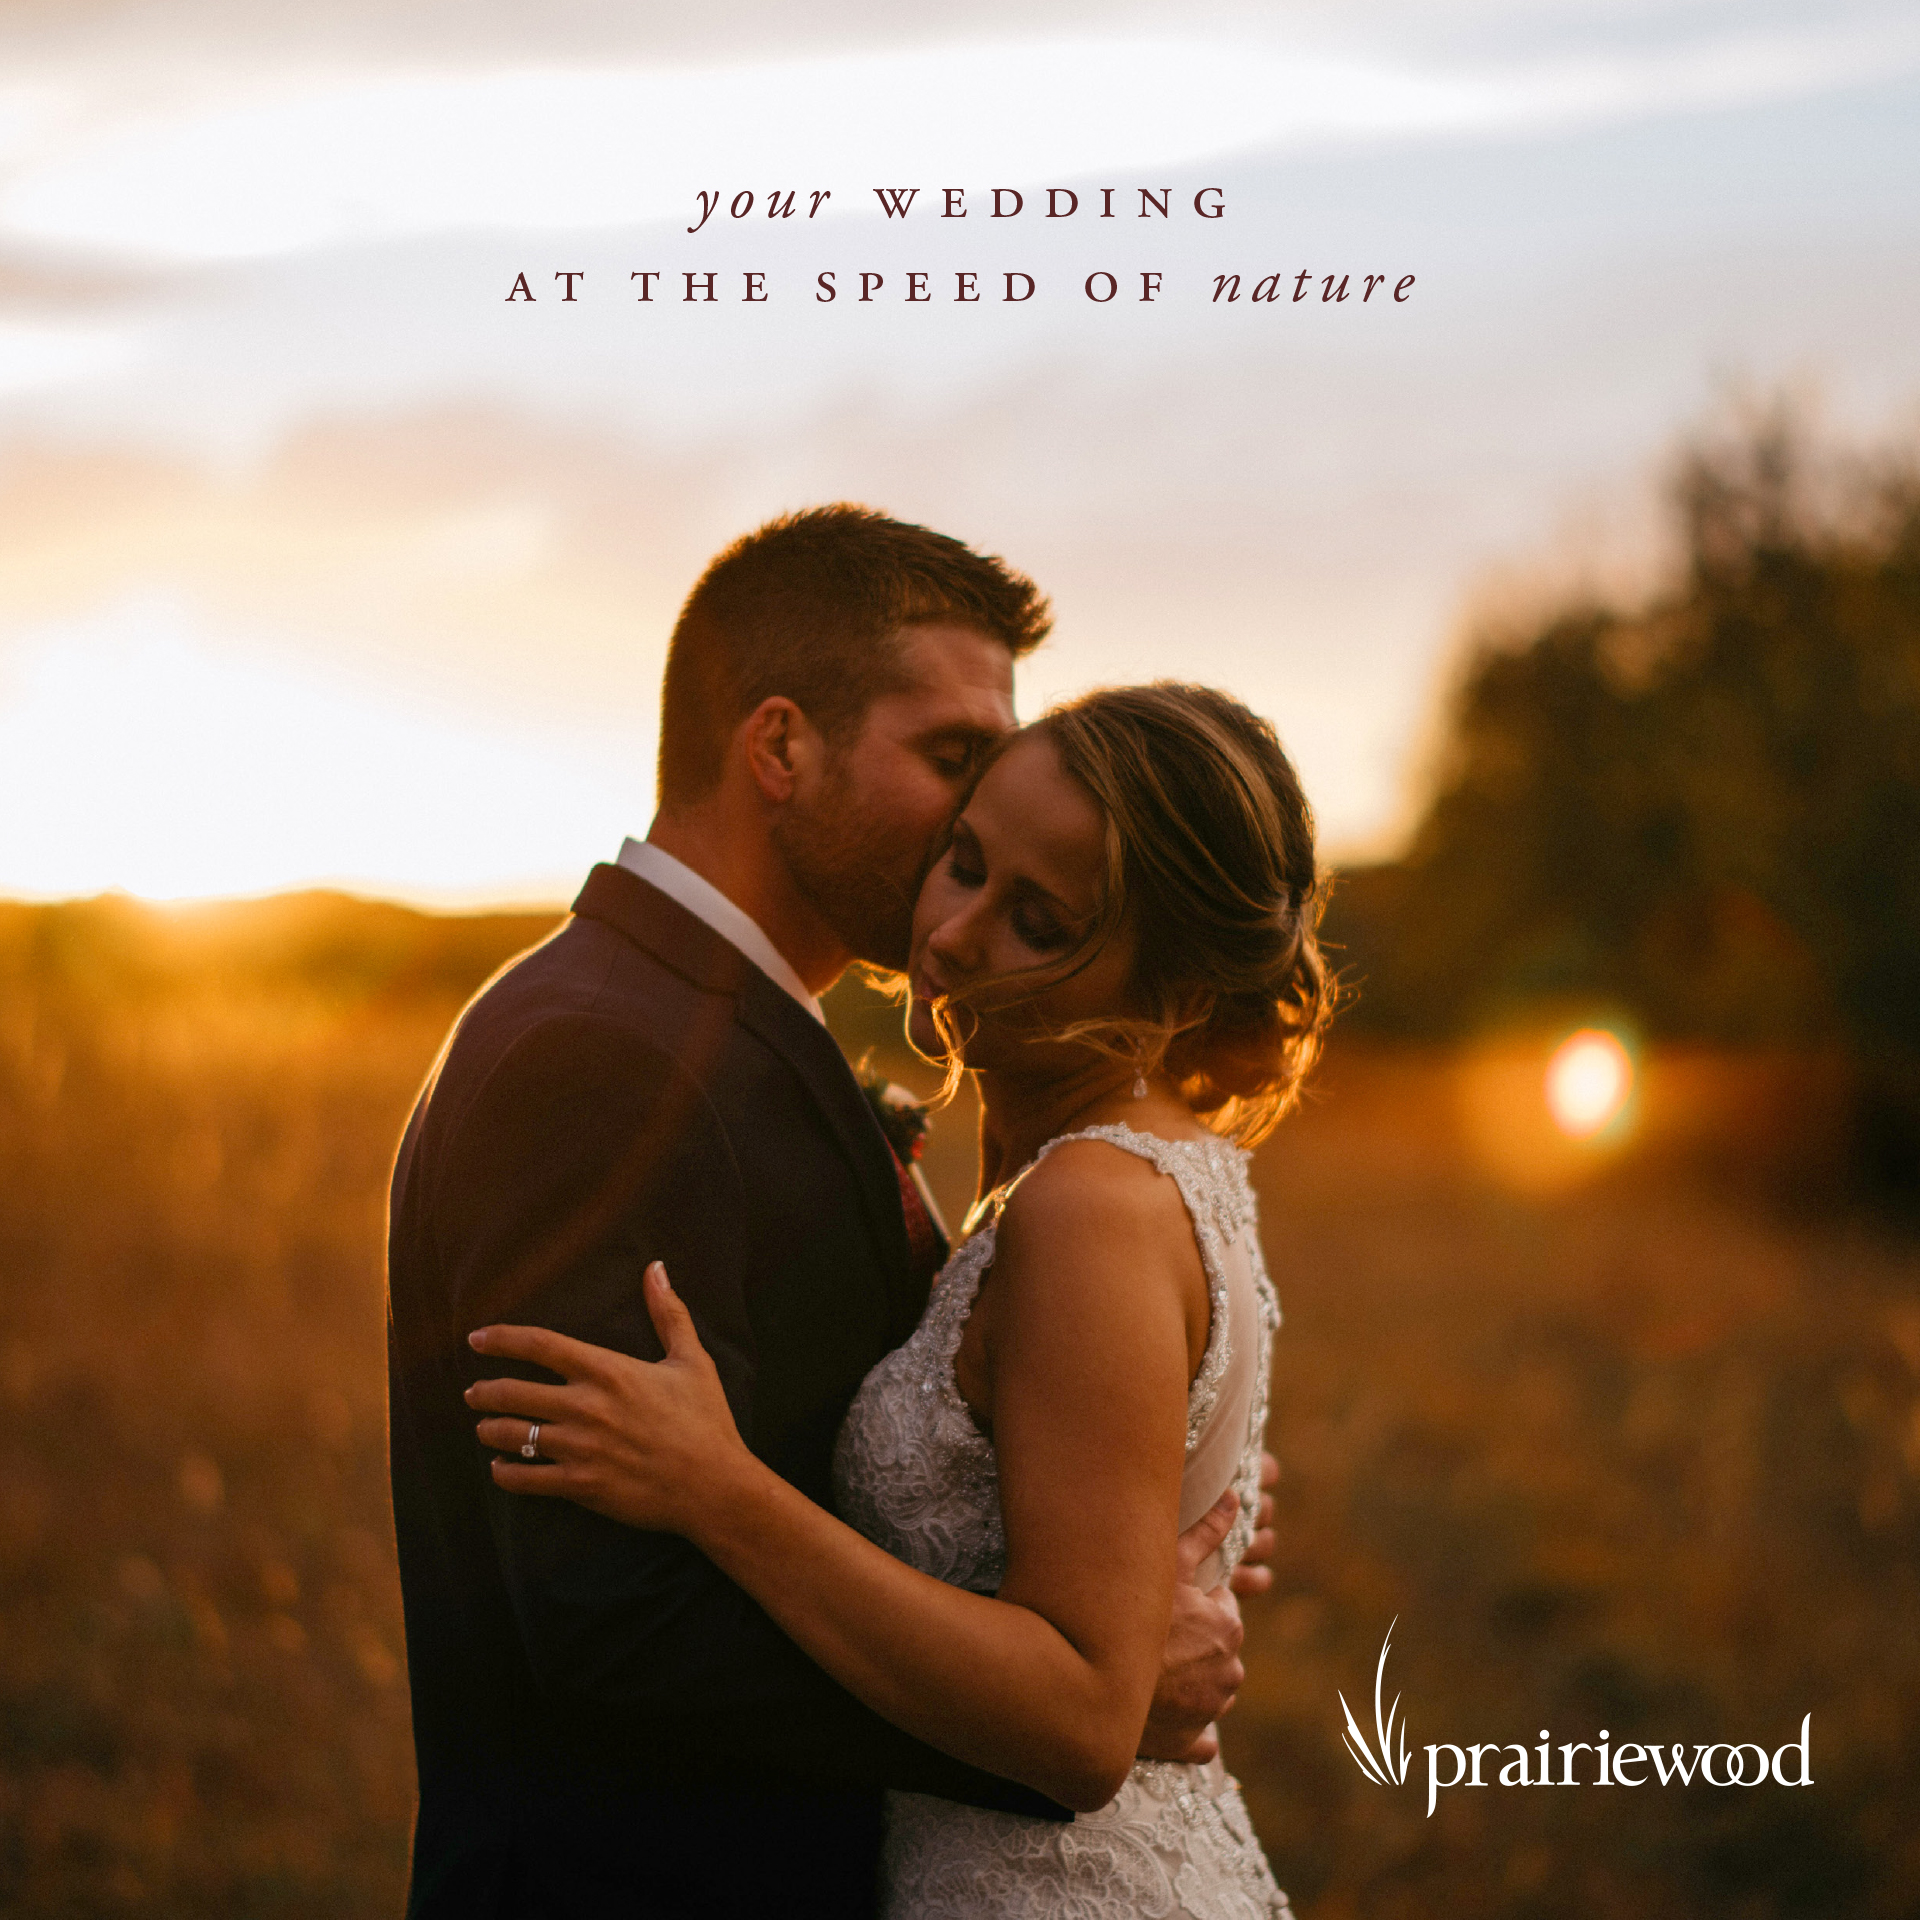 Prairiewood Wedding Guide